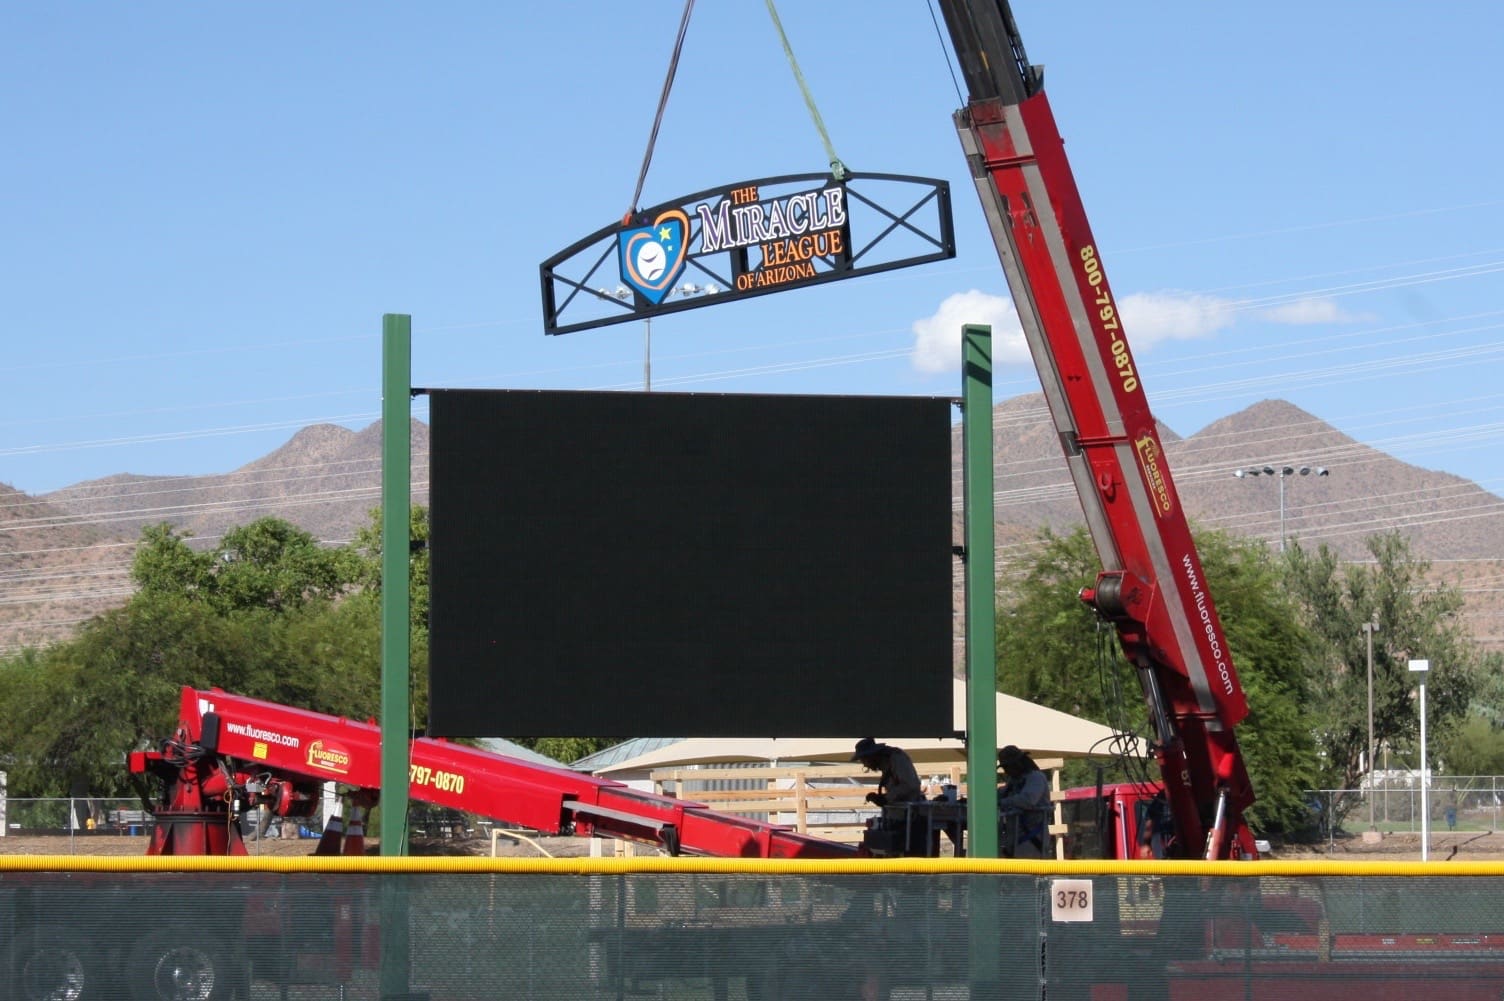 A crane lifts a large sign onto a baseball field.